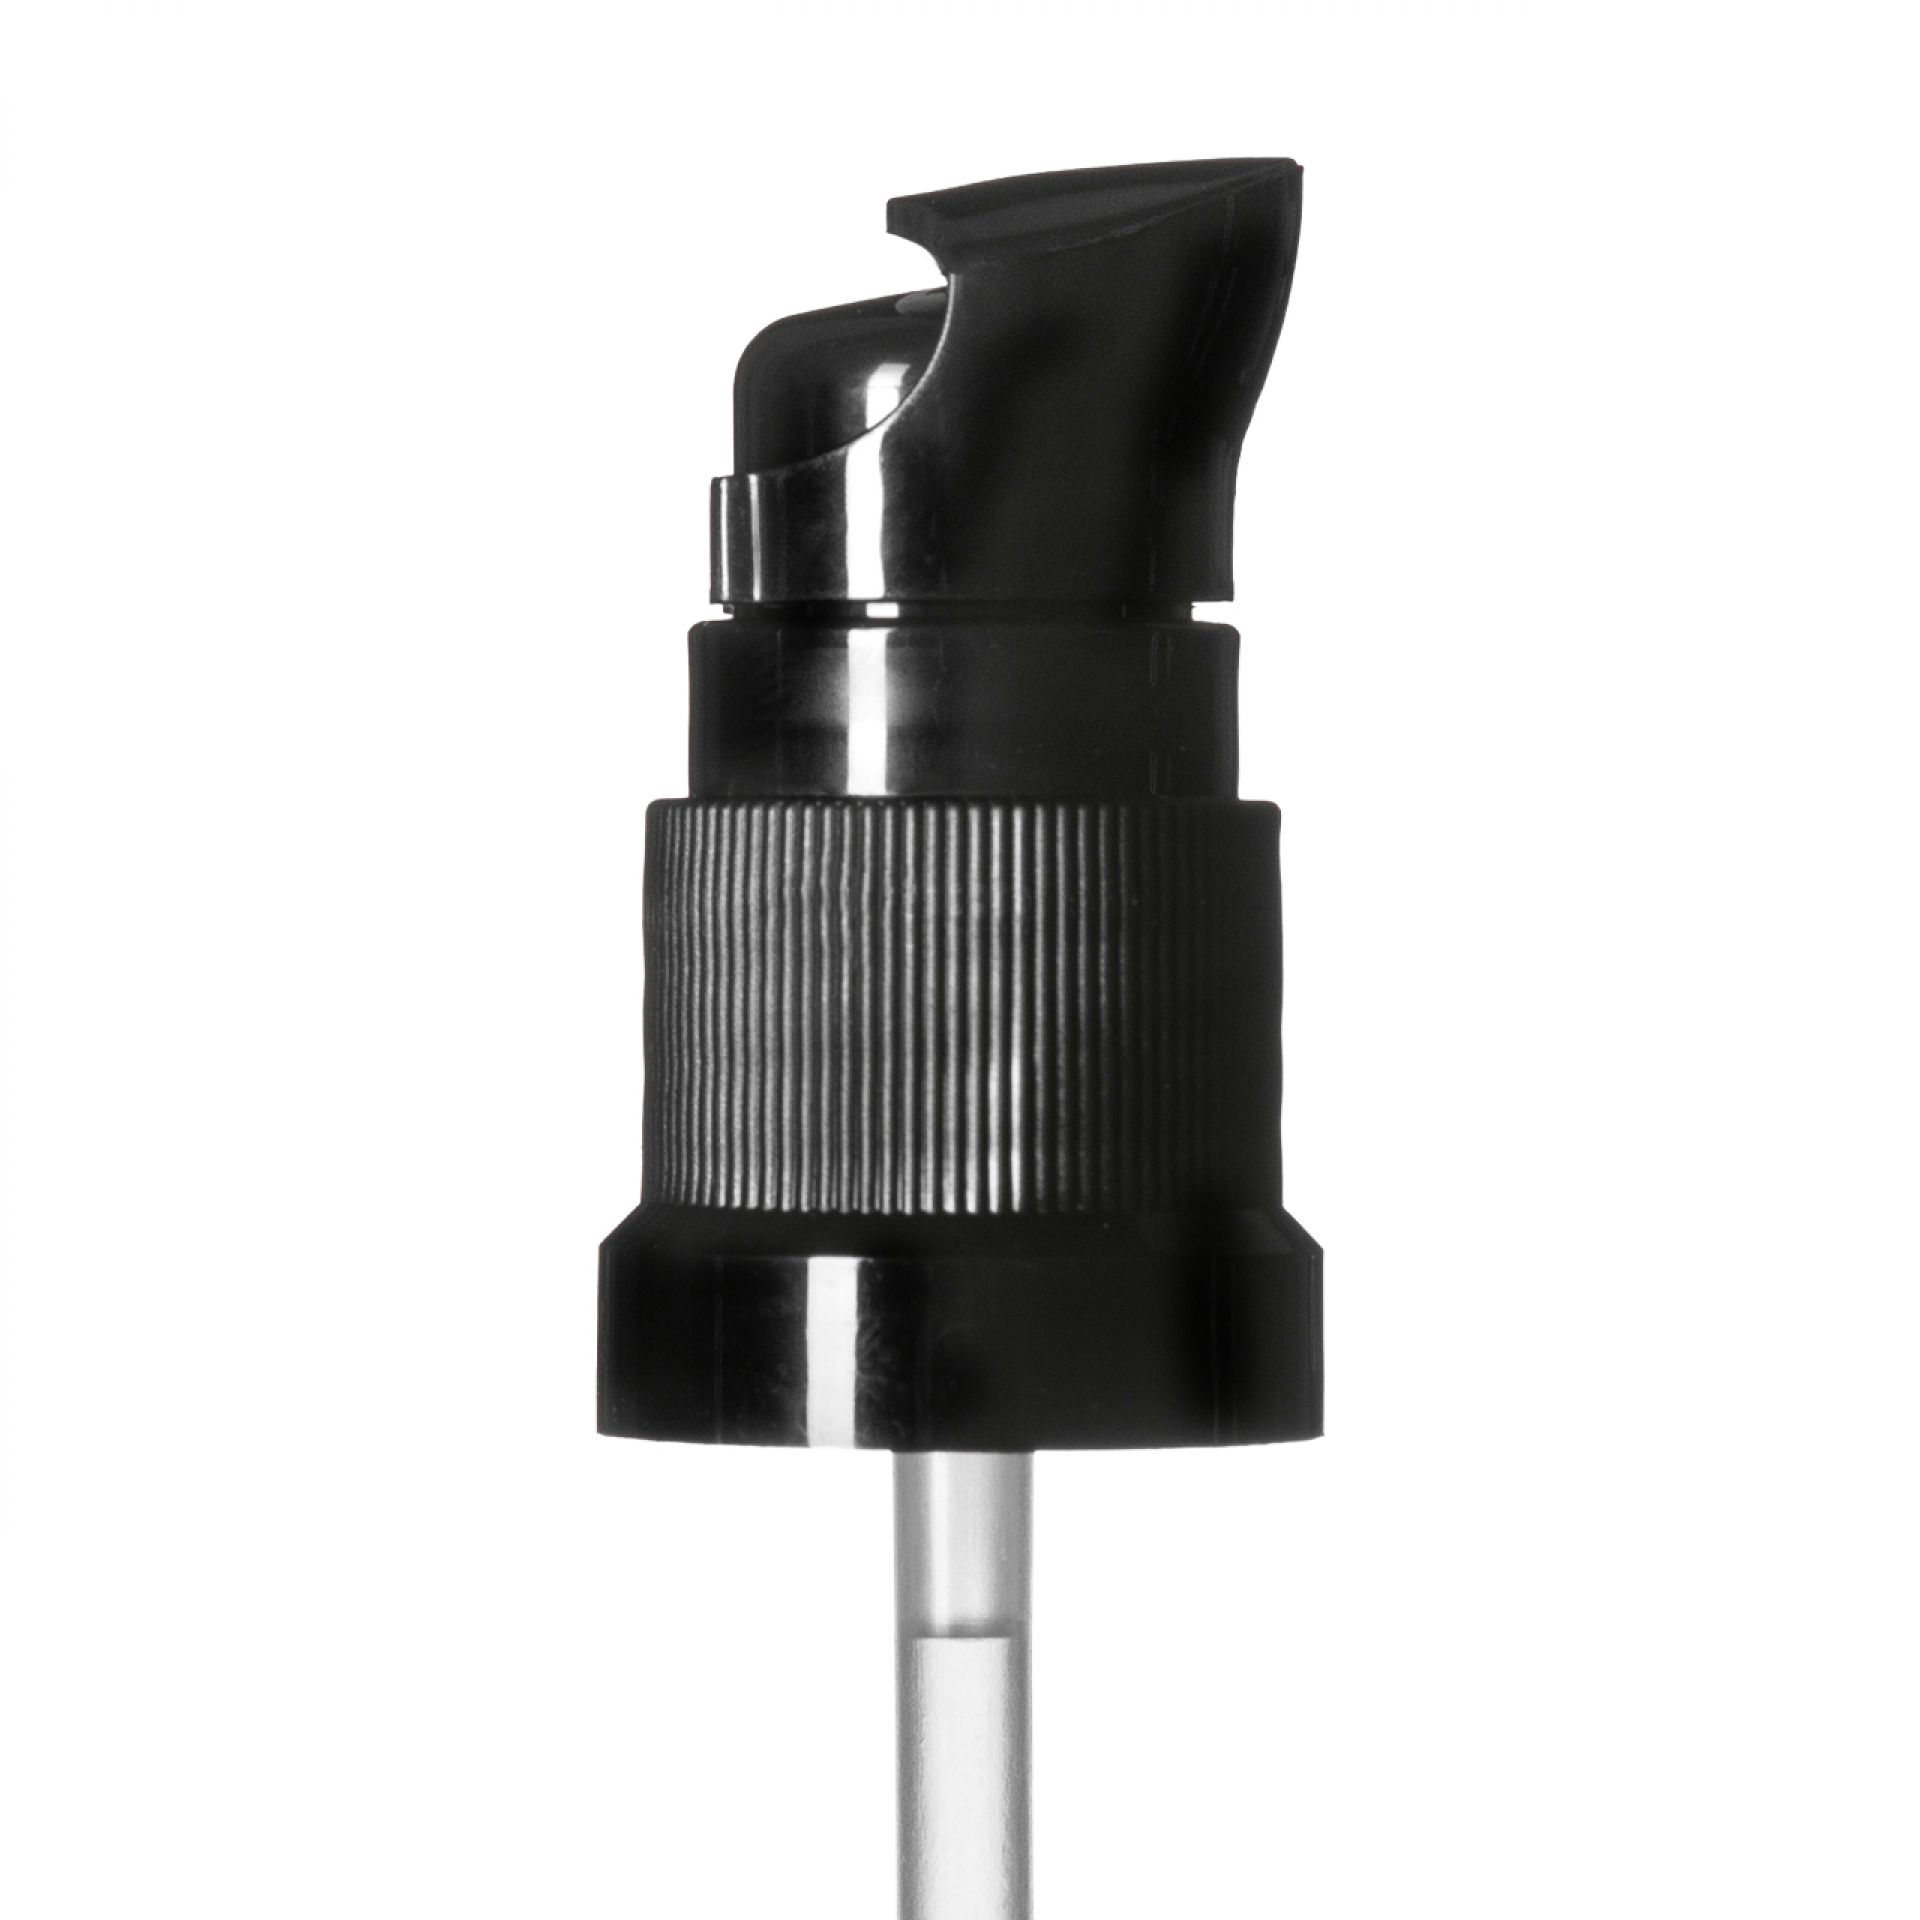 Lotion pump Metropolitan DIN18, PP, black, dose 0.14ml, black security clip (Orion 20)